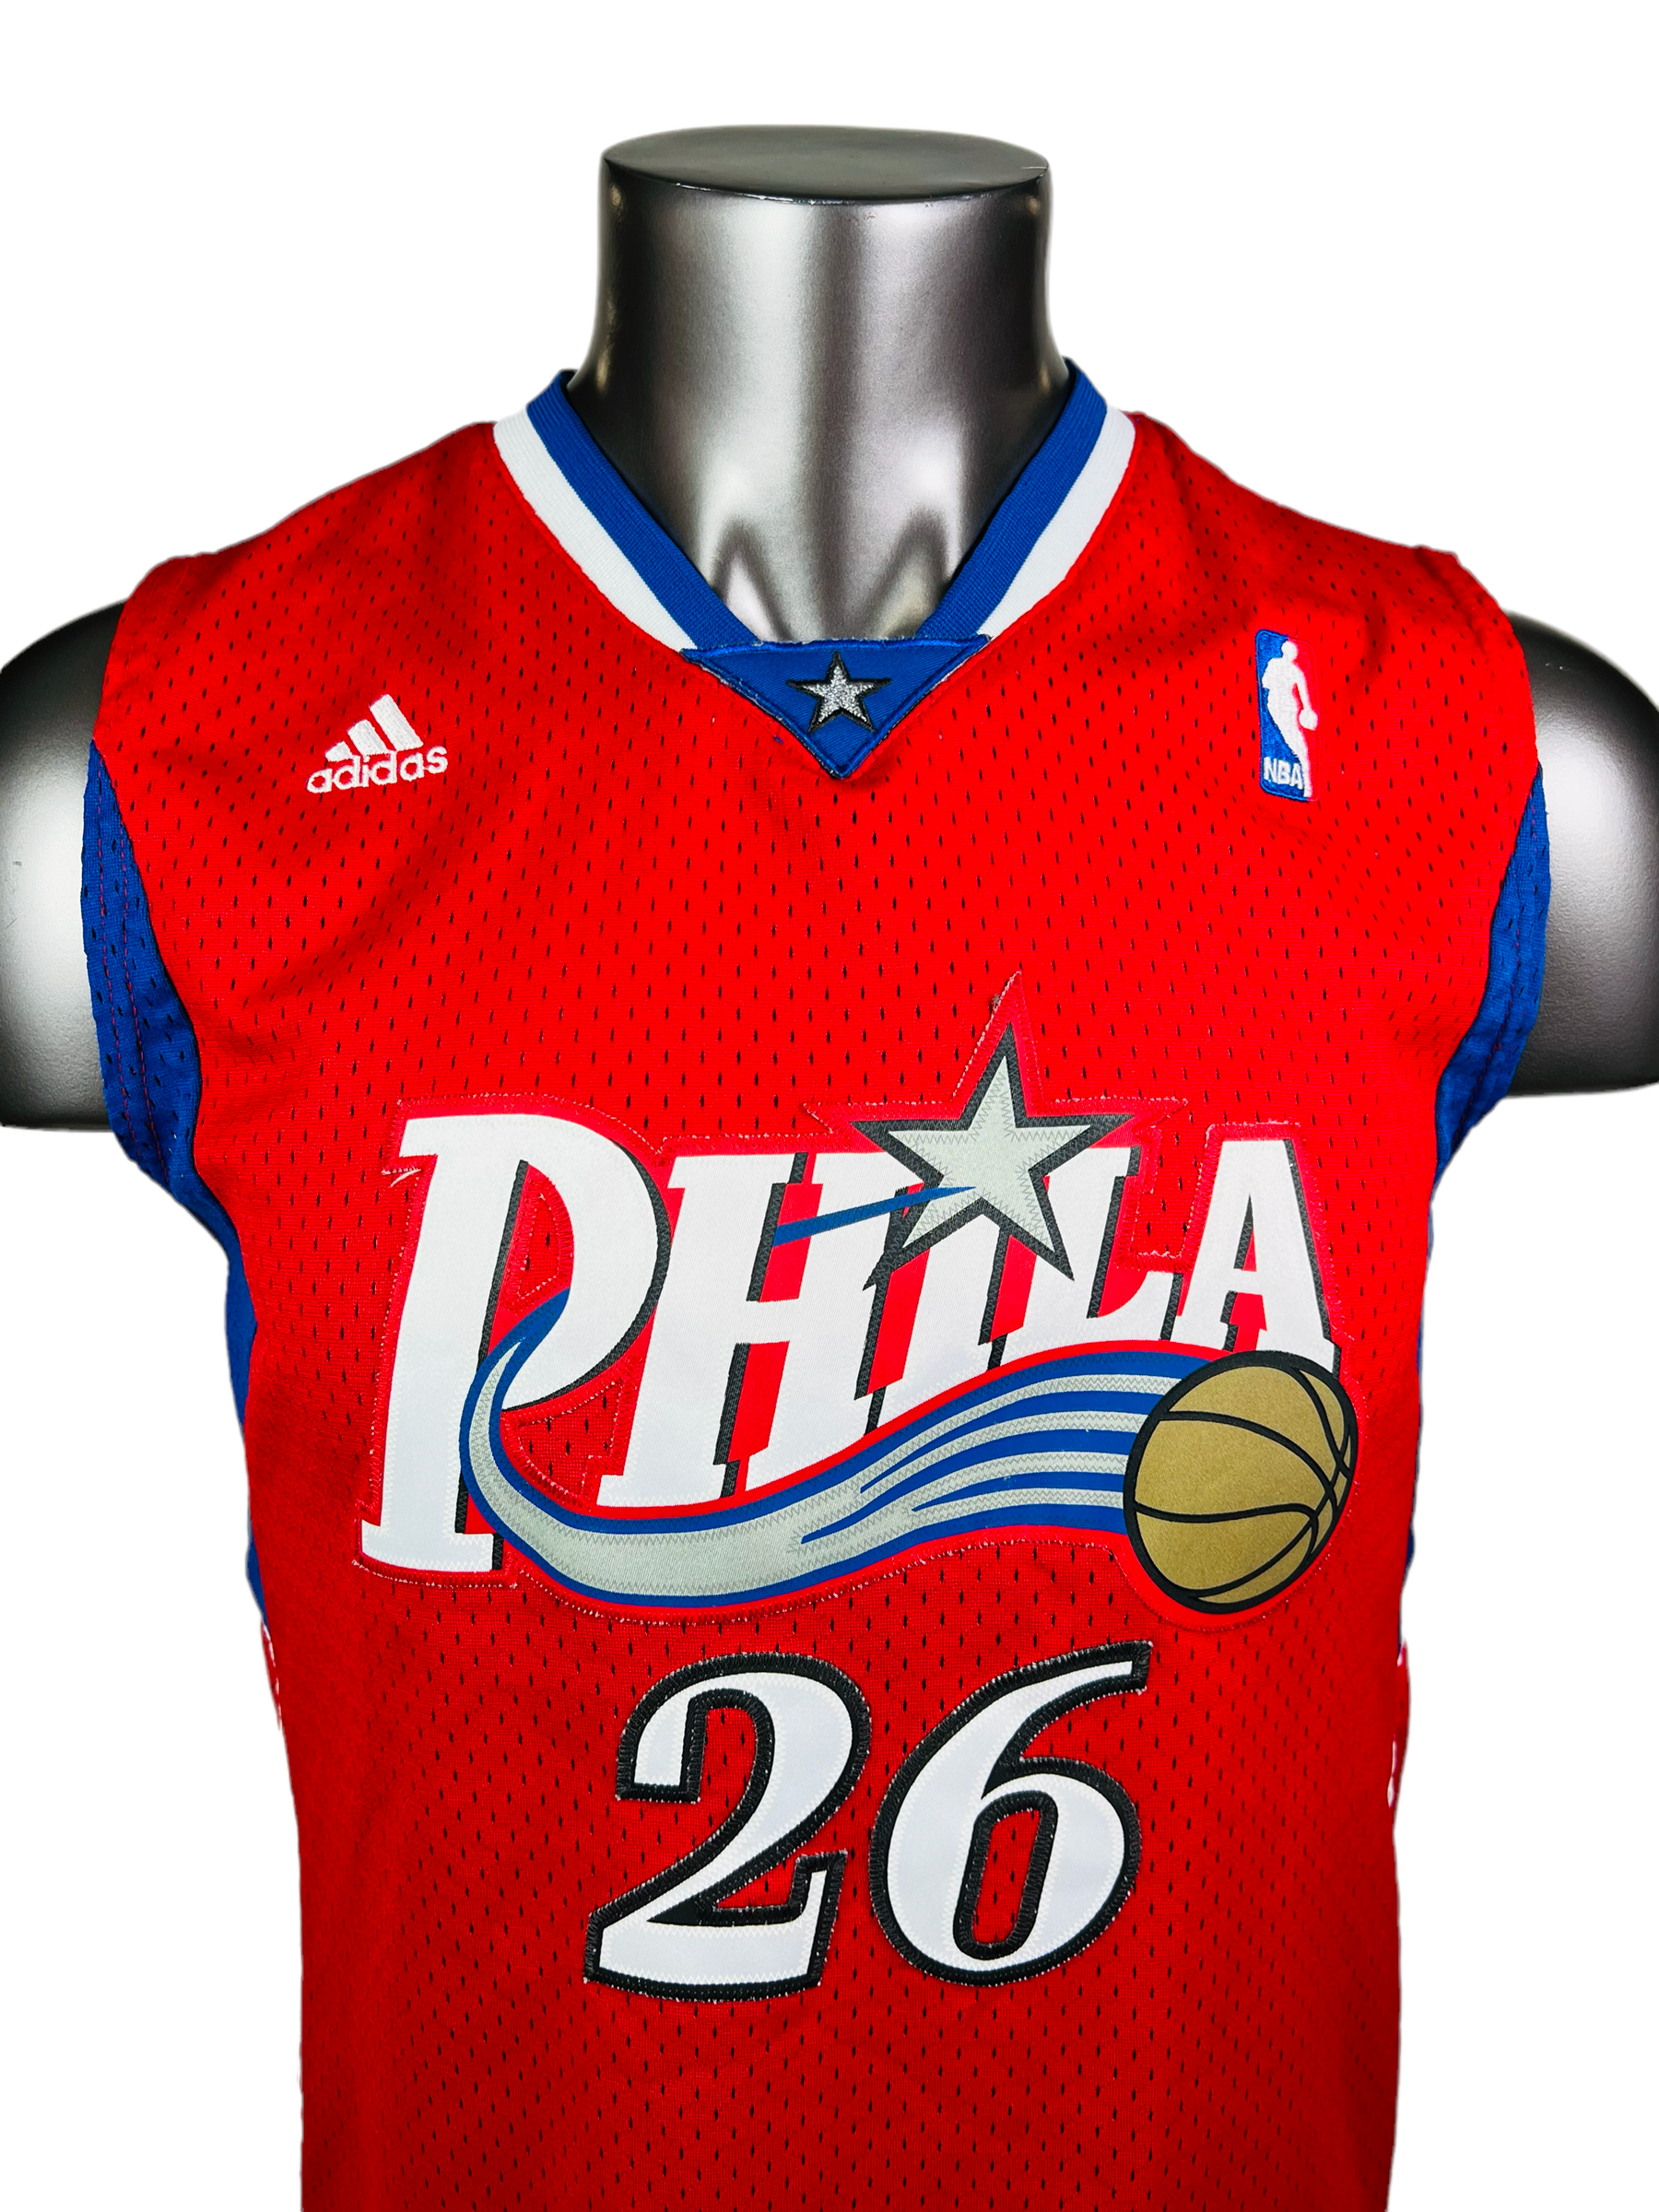 Vintage Philadelphia 76ers Sixers NBA Basketball Jersey Adidas 